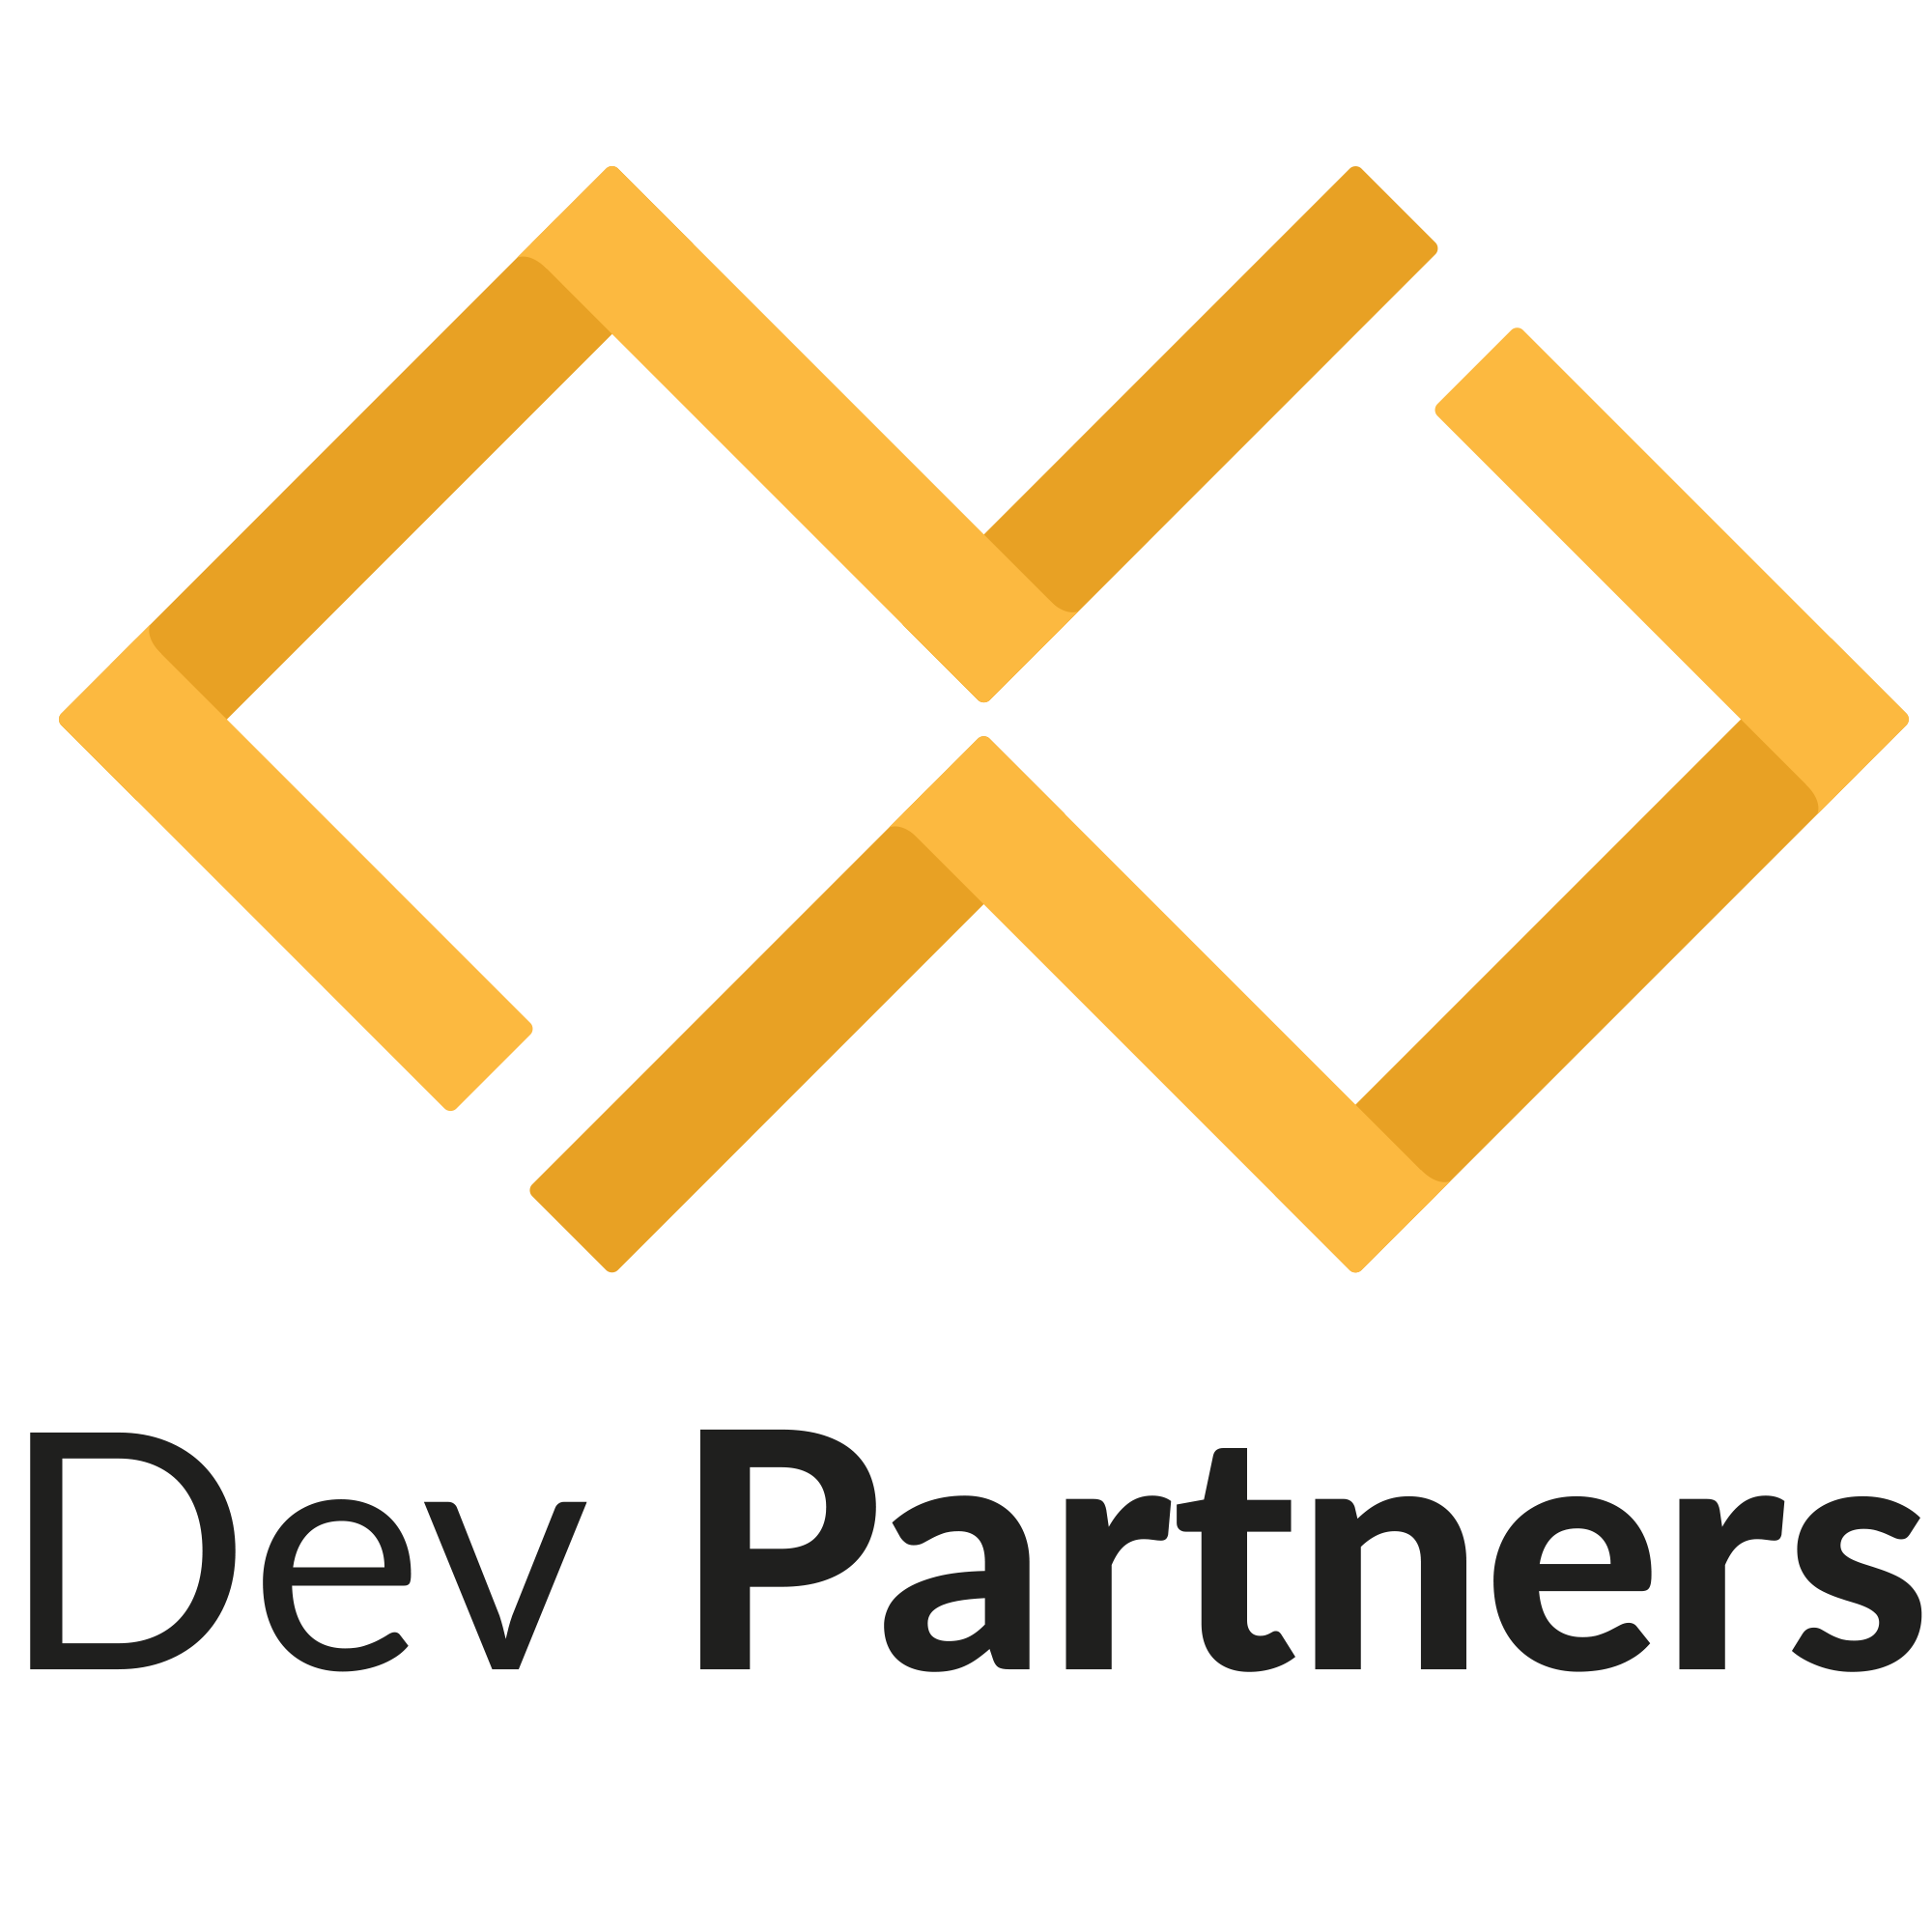 Dev Partners